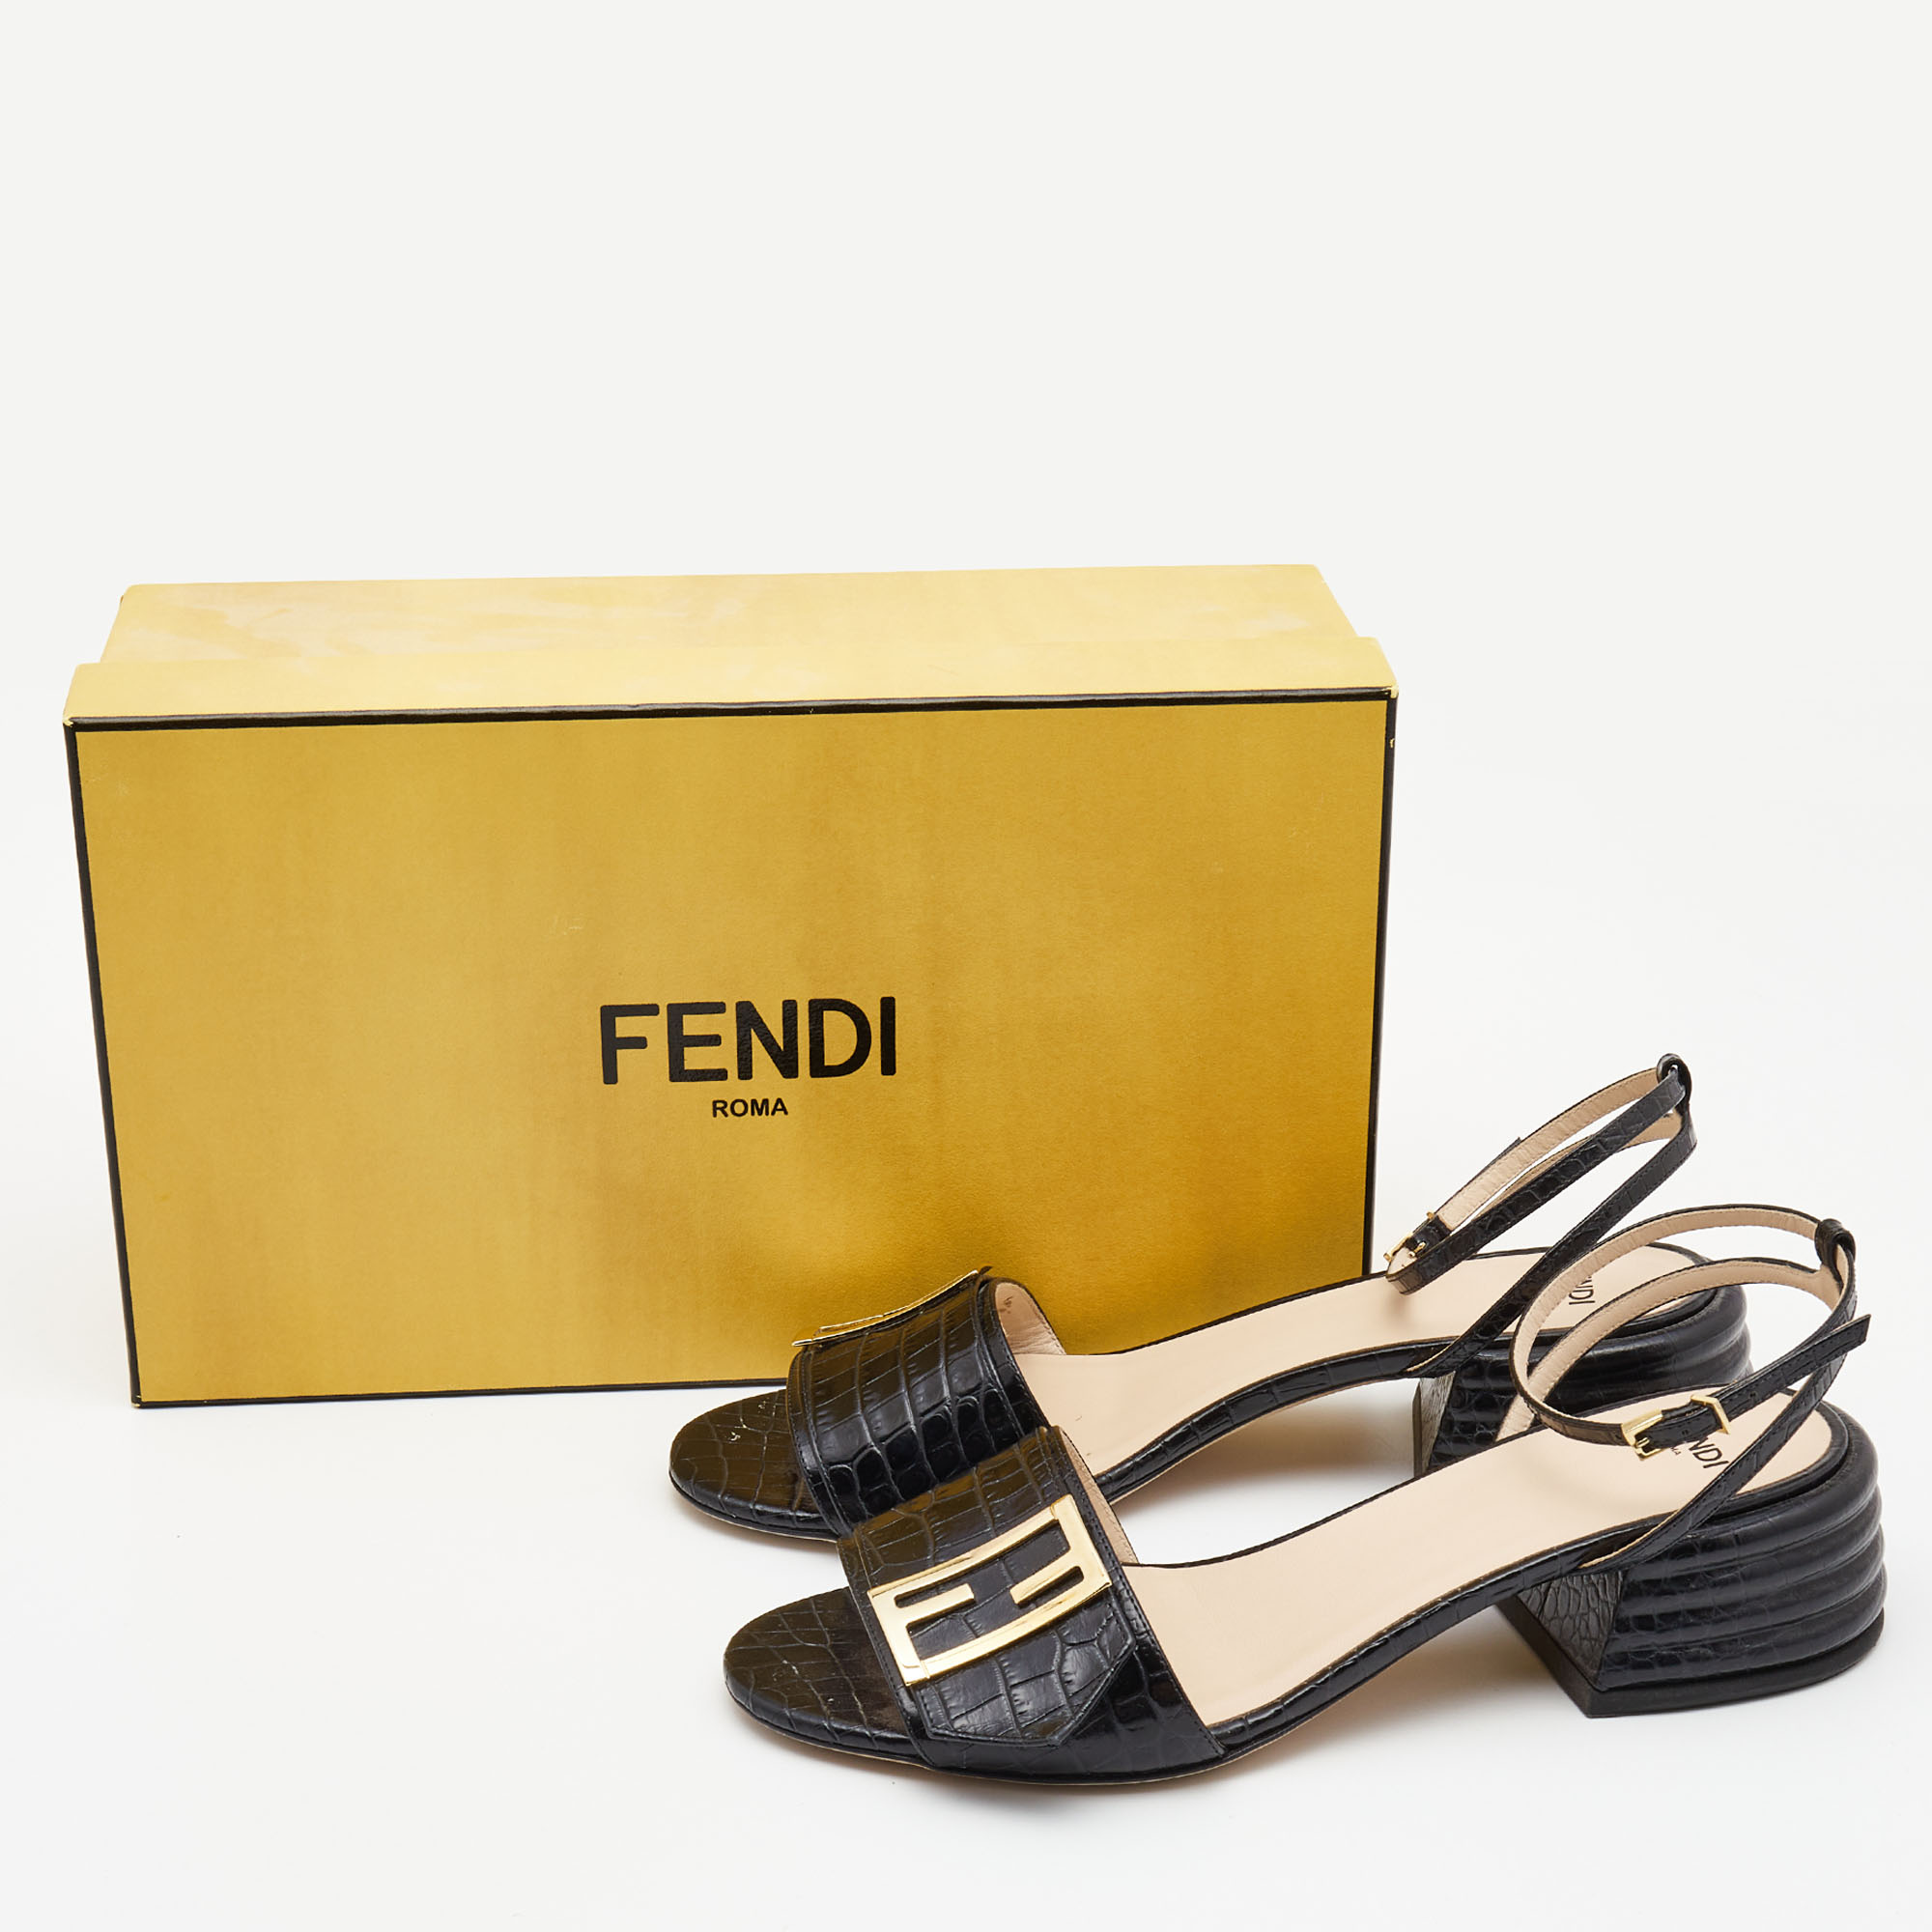 Fendi Black Croc Embossed Leather Promenade Ankle Strap Sandals Size 38.5